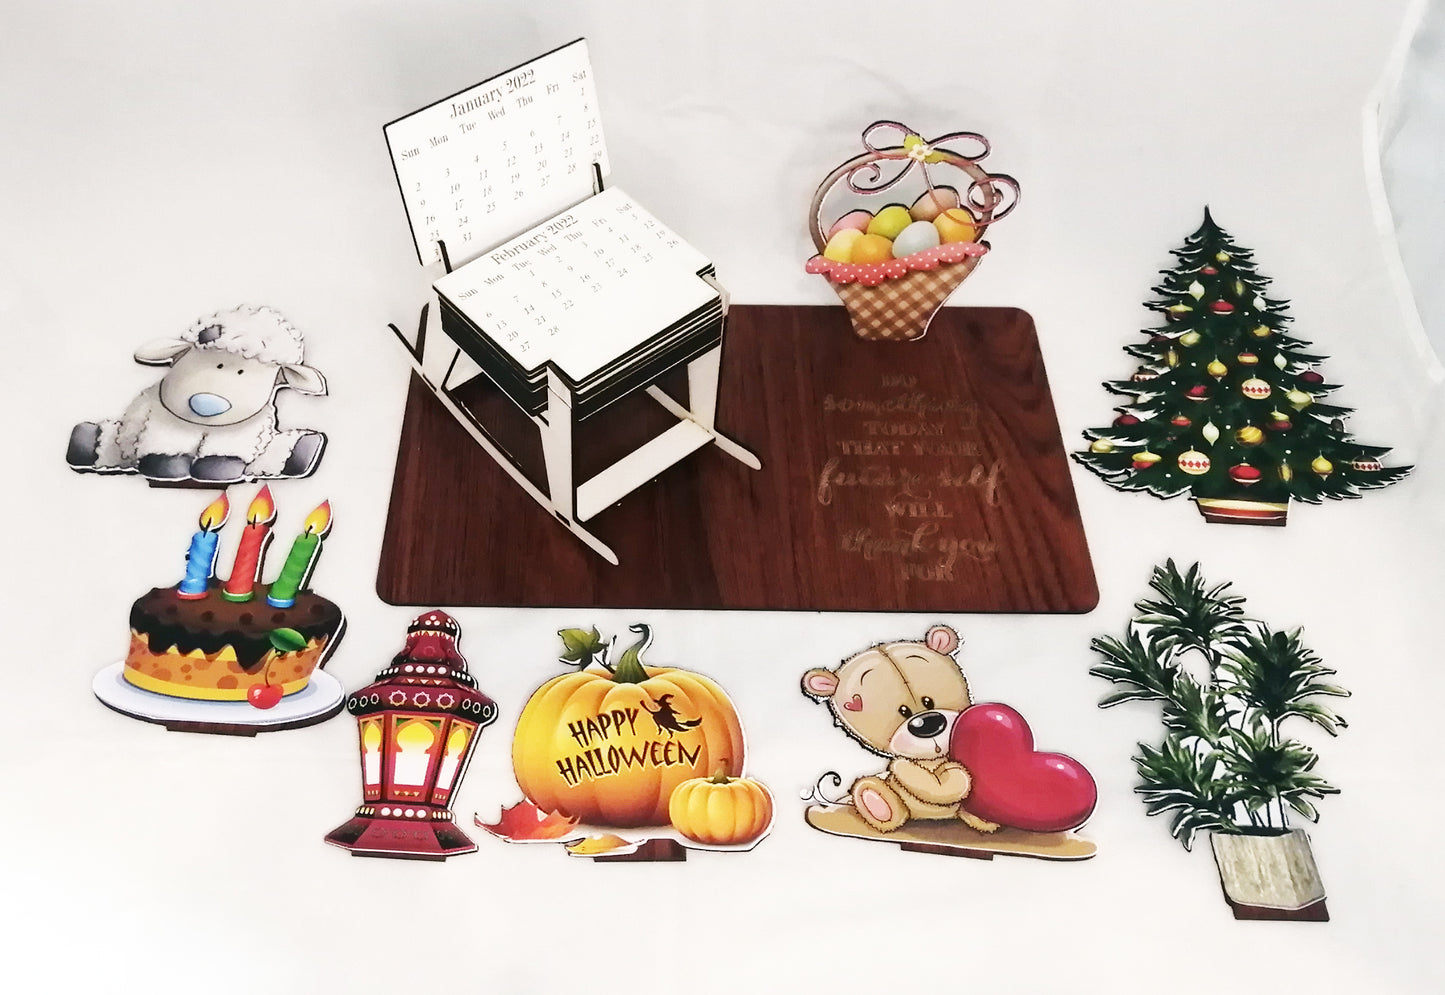 Chair calendar with seasonal decorations